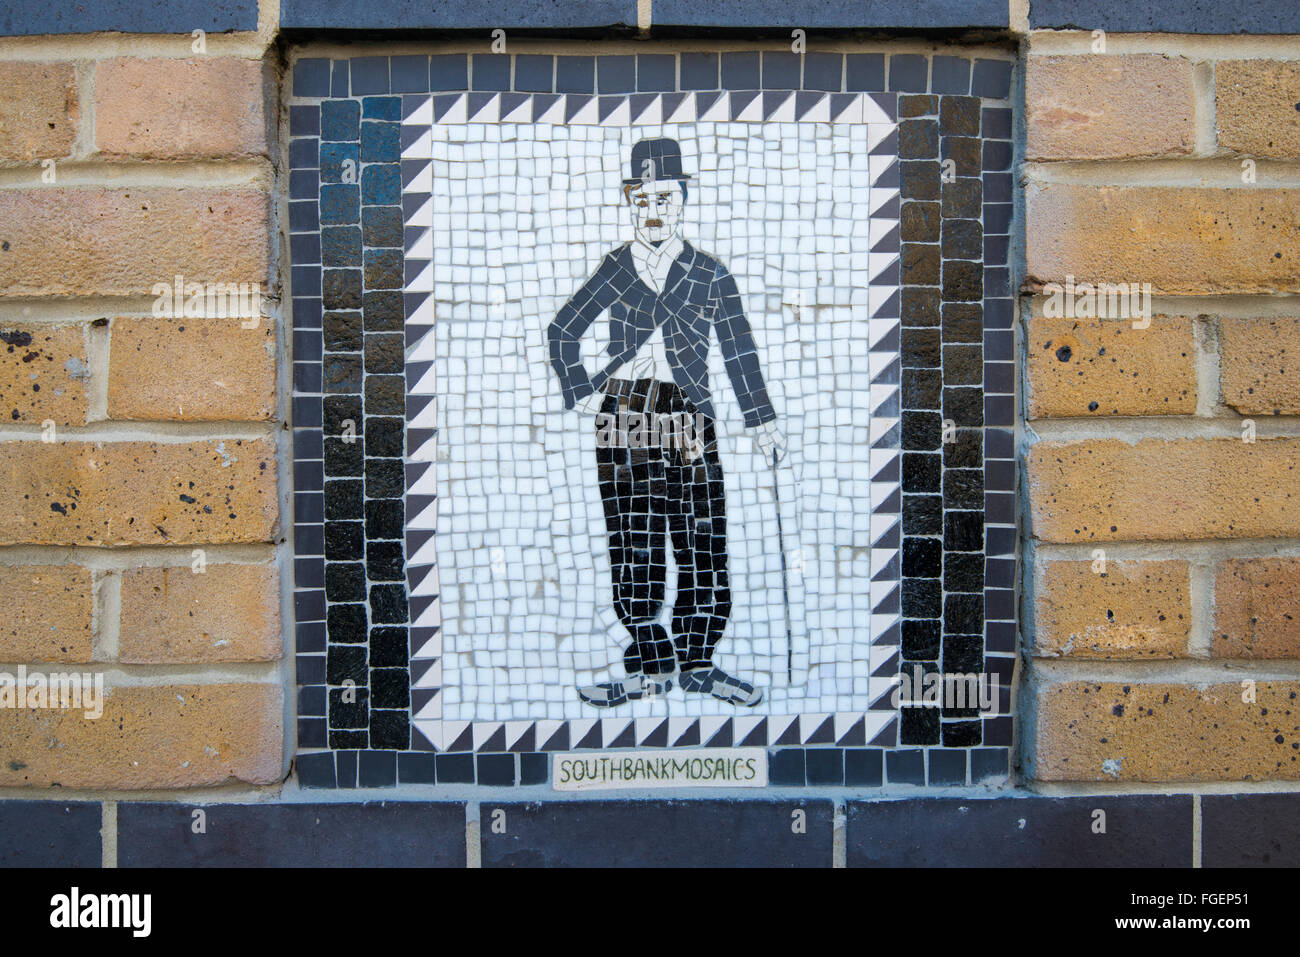 Southbank Mosaic of Charlie Chaplin on the Lambeth Walk in London, England UK Stock Photo